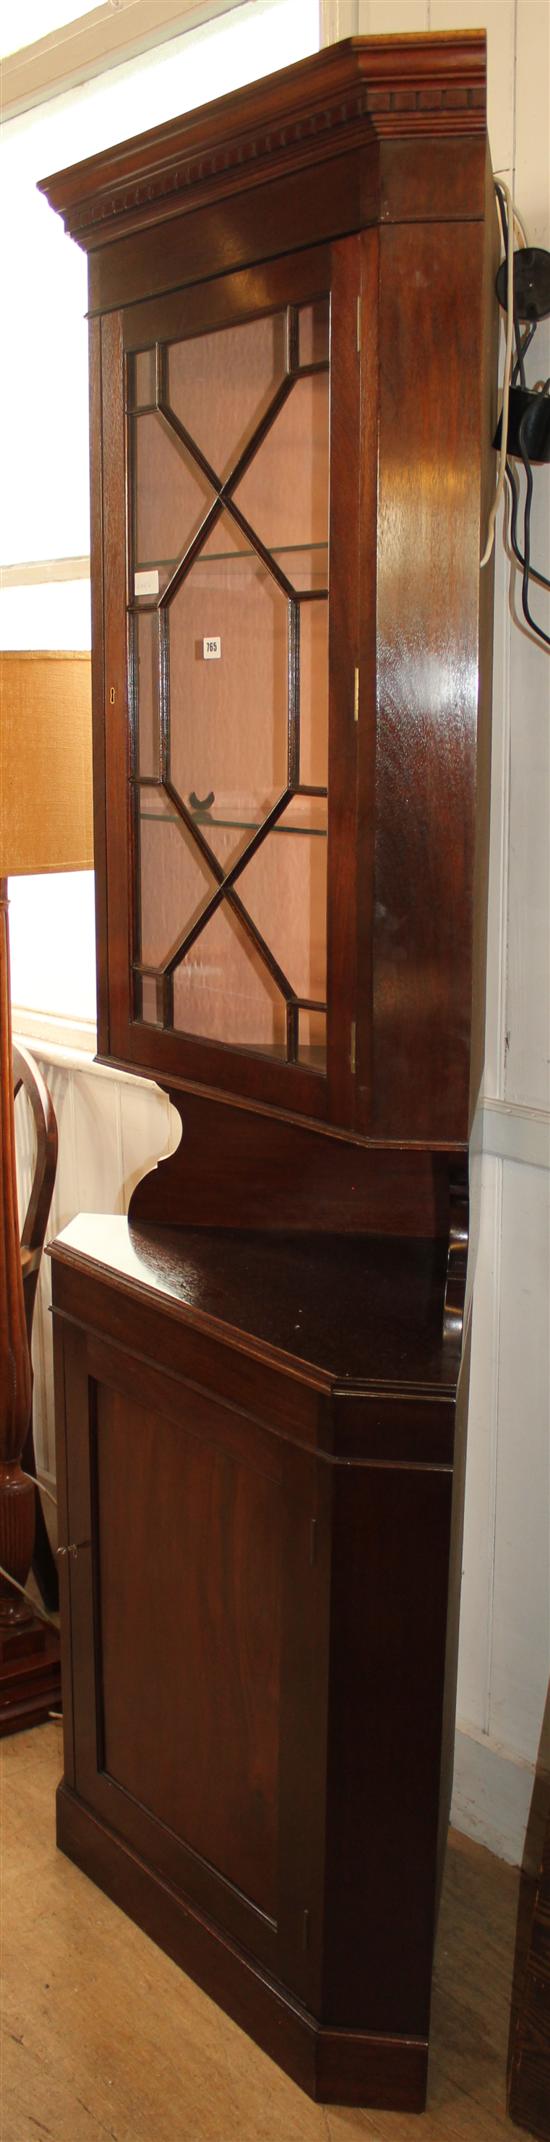 Early 20th century mahogany floor standing corner cabinet